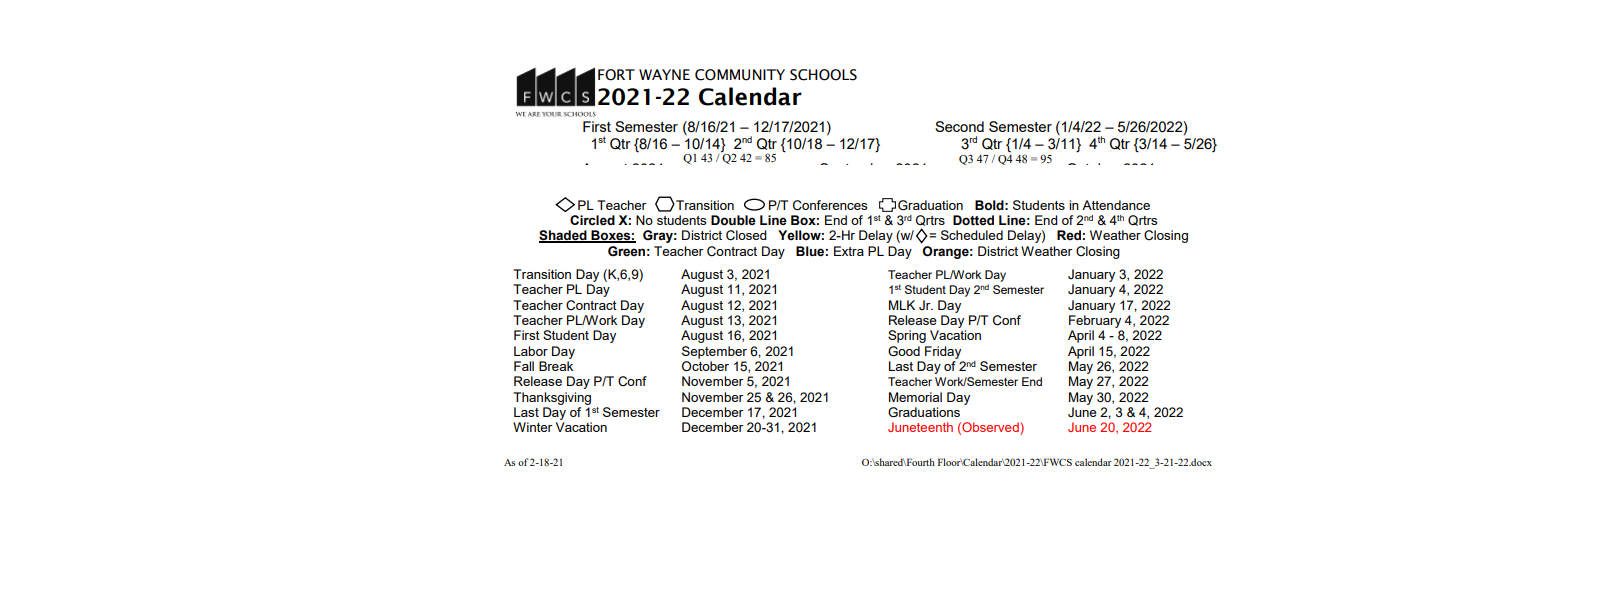 District School Academic Calendar Key for Glenwood Park Elementary Sch